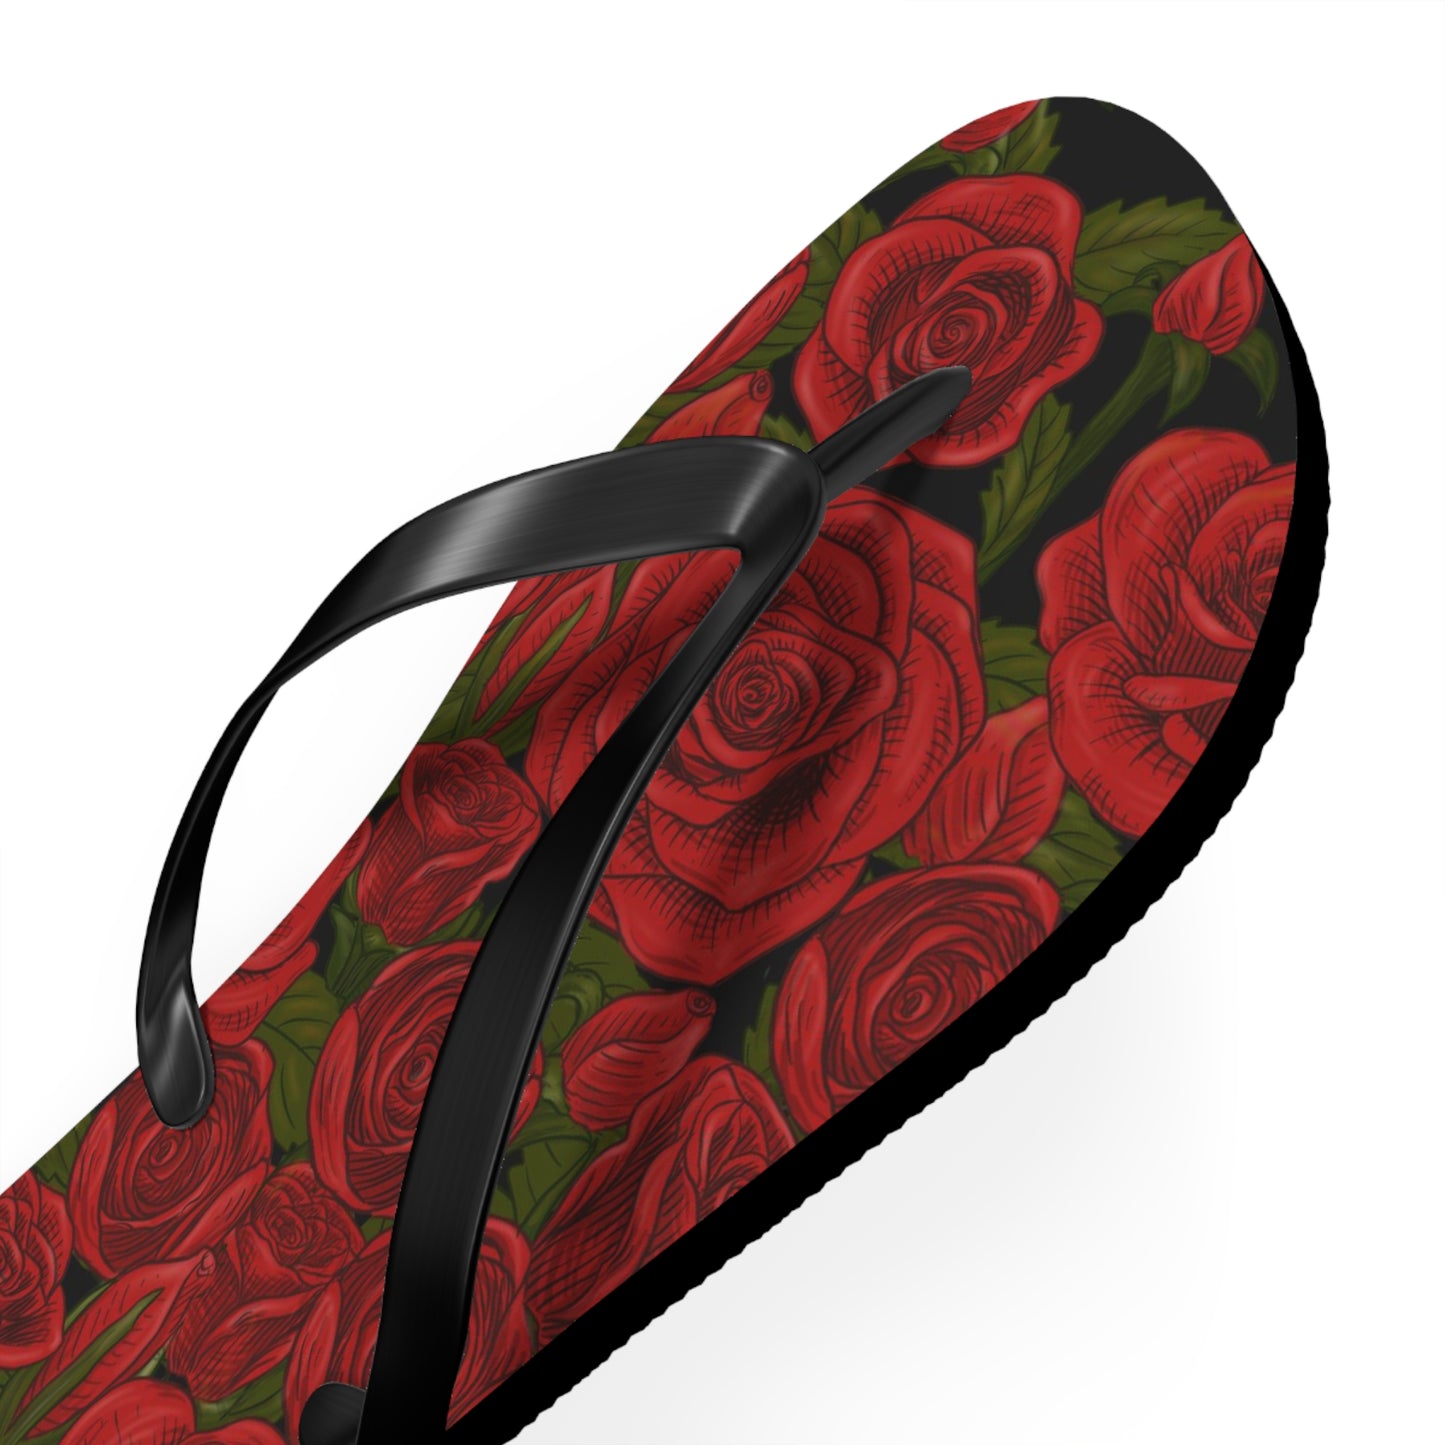 Rozen Red Rose Flip-Flops